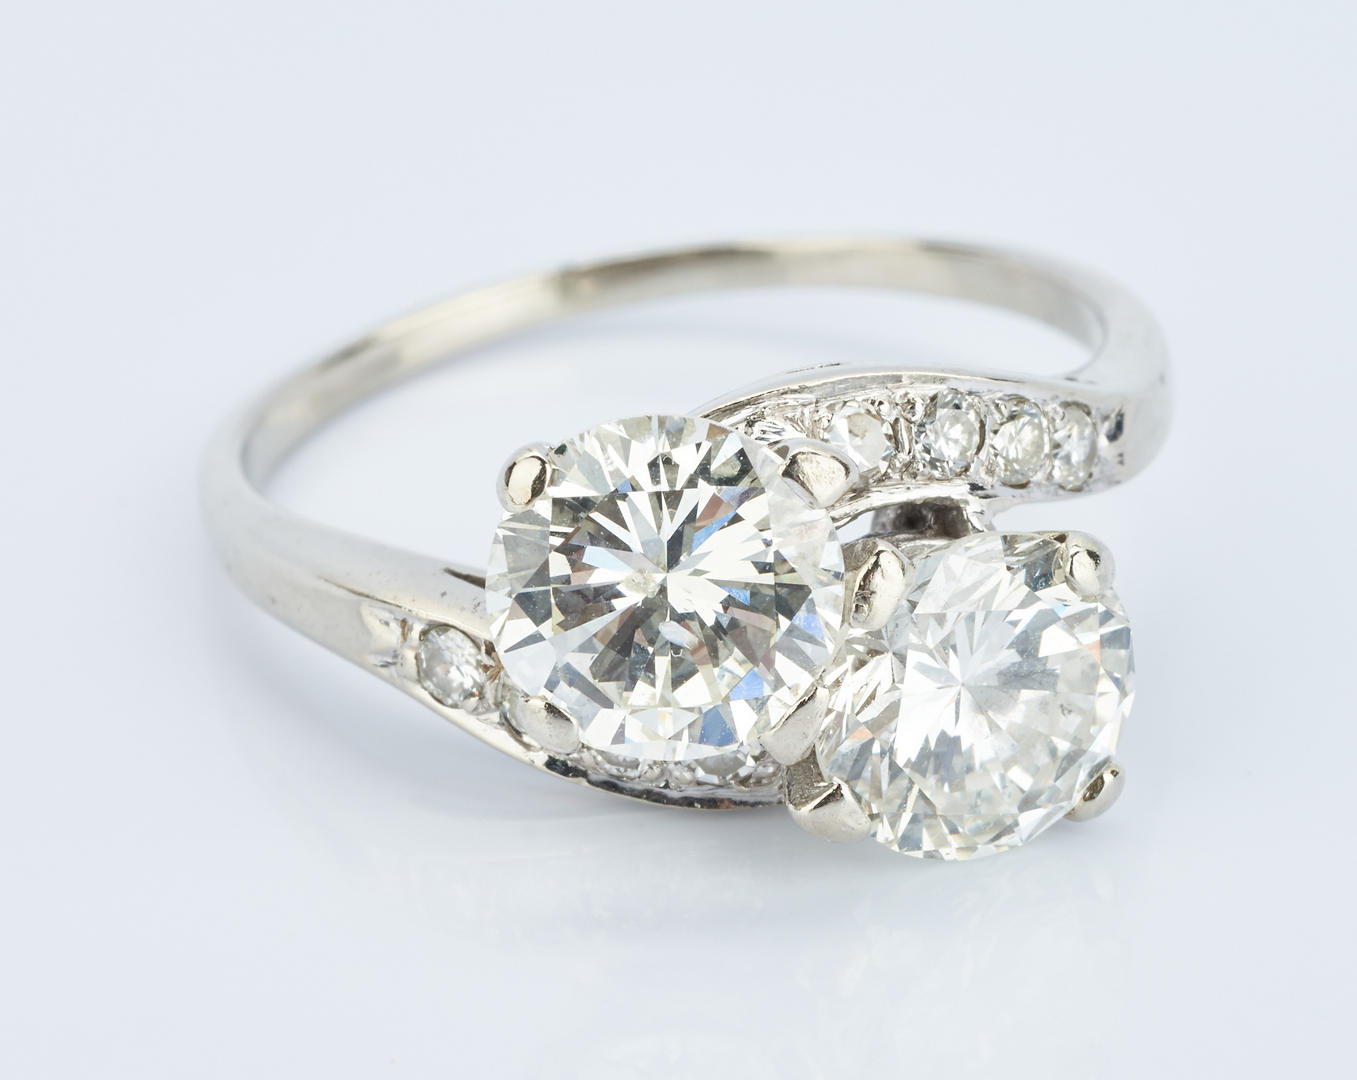 Lot 214: Ladies 14K Diamond Bypass Ring, 2.2 Carats